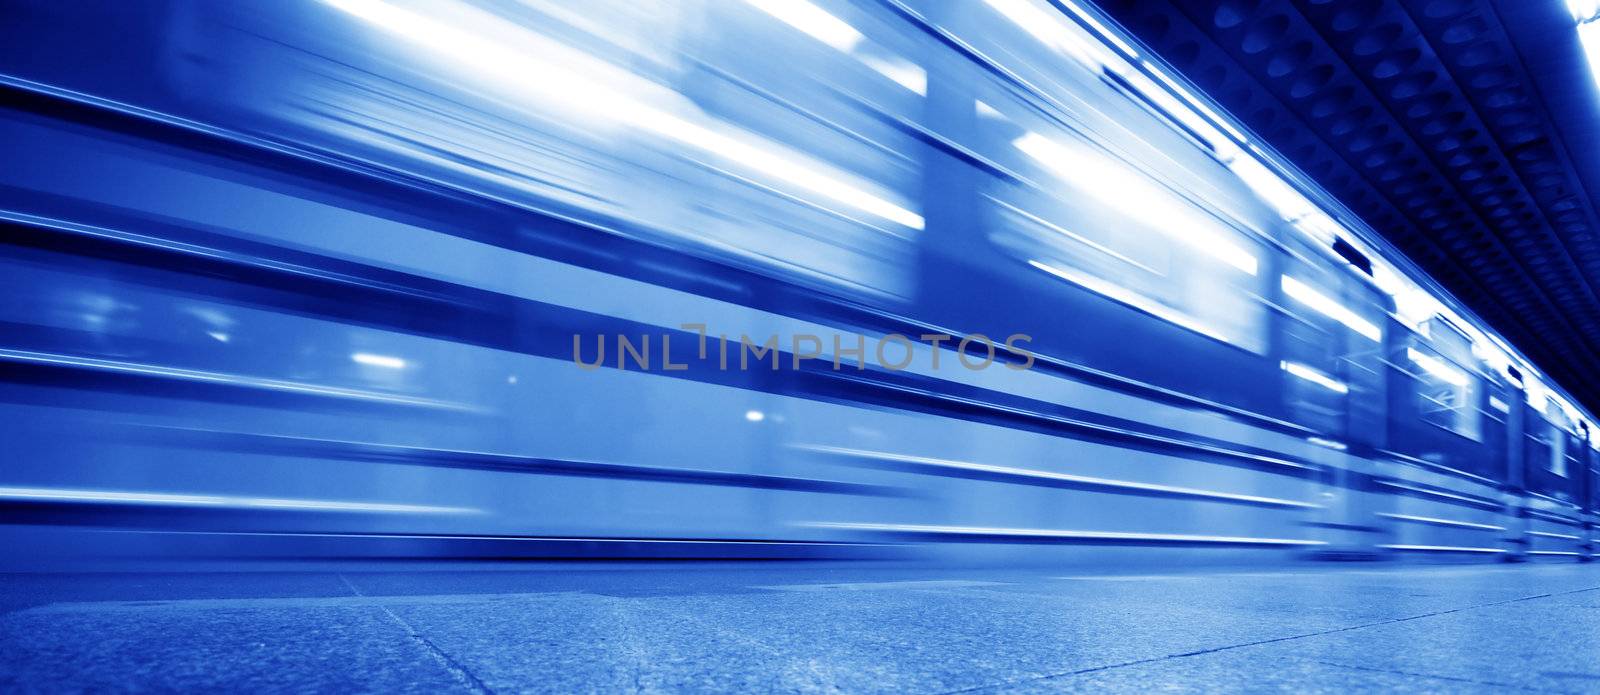 Underground train dynamic motion by photocreo